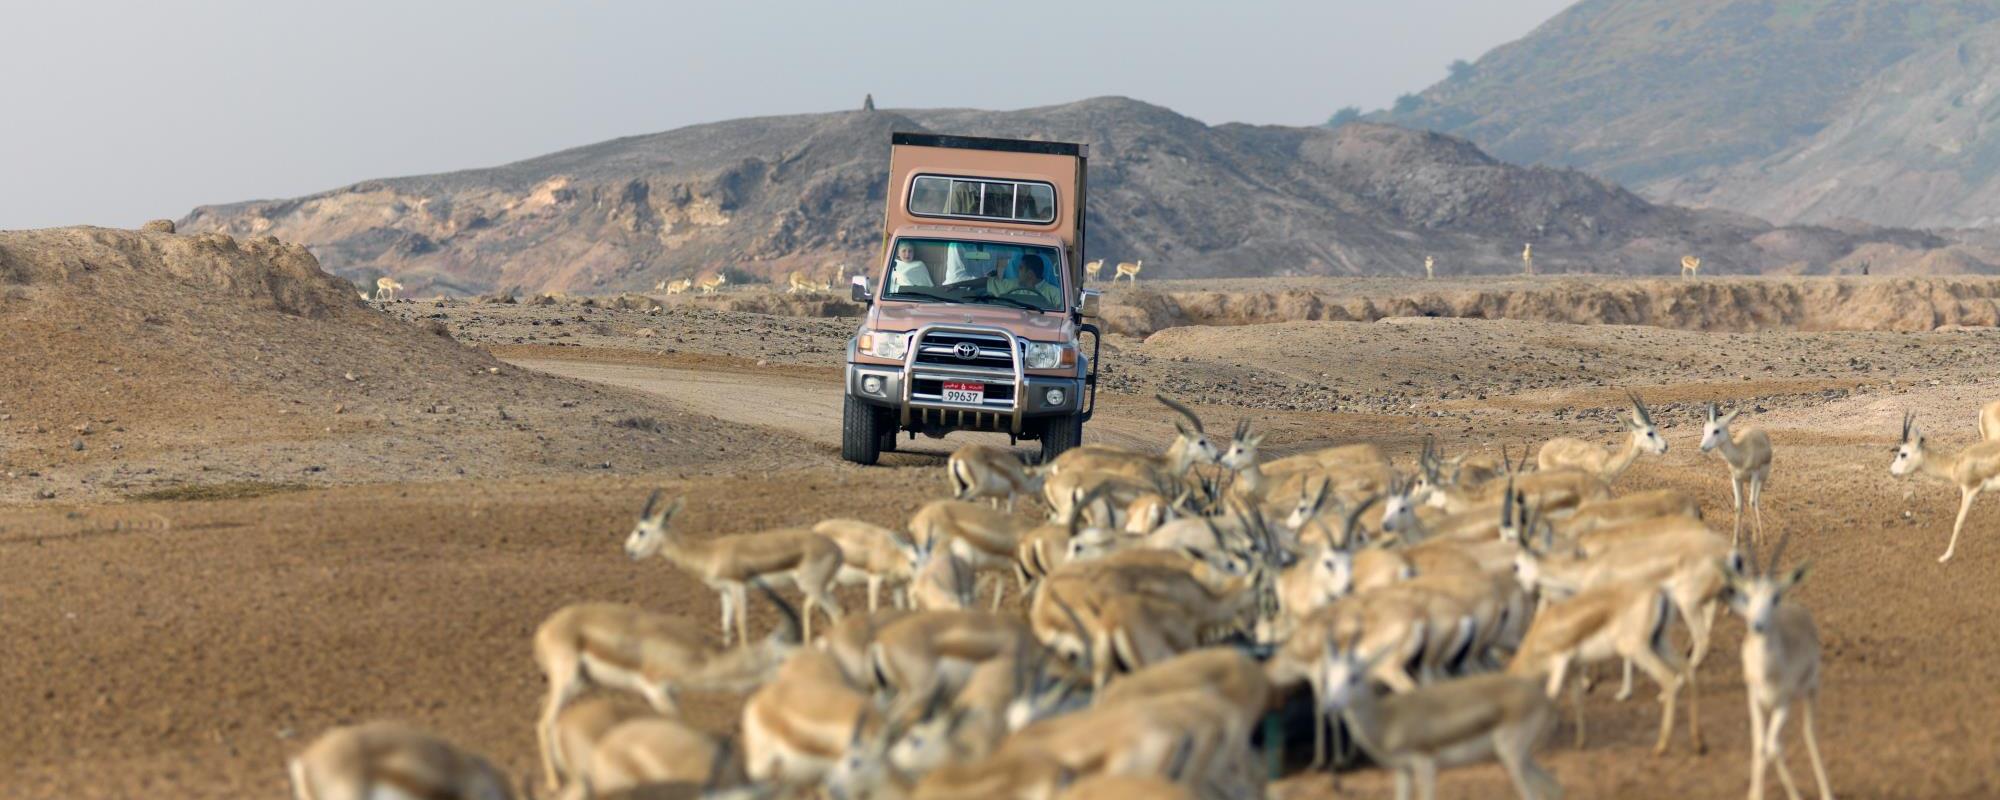 Arabian-Wildlife-Park-Hero-02.jpg